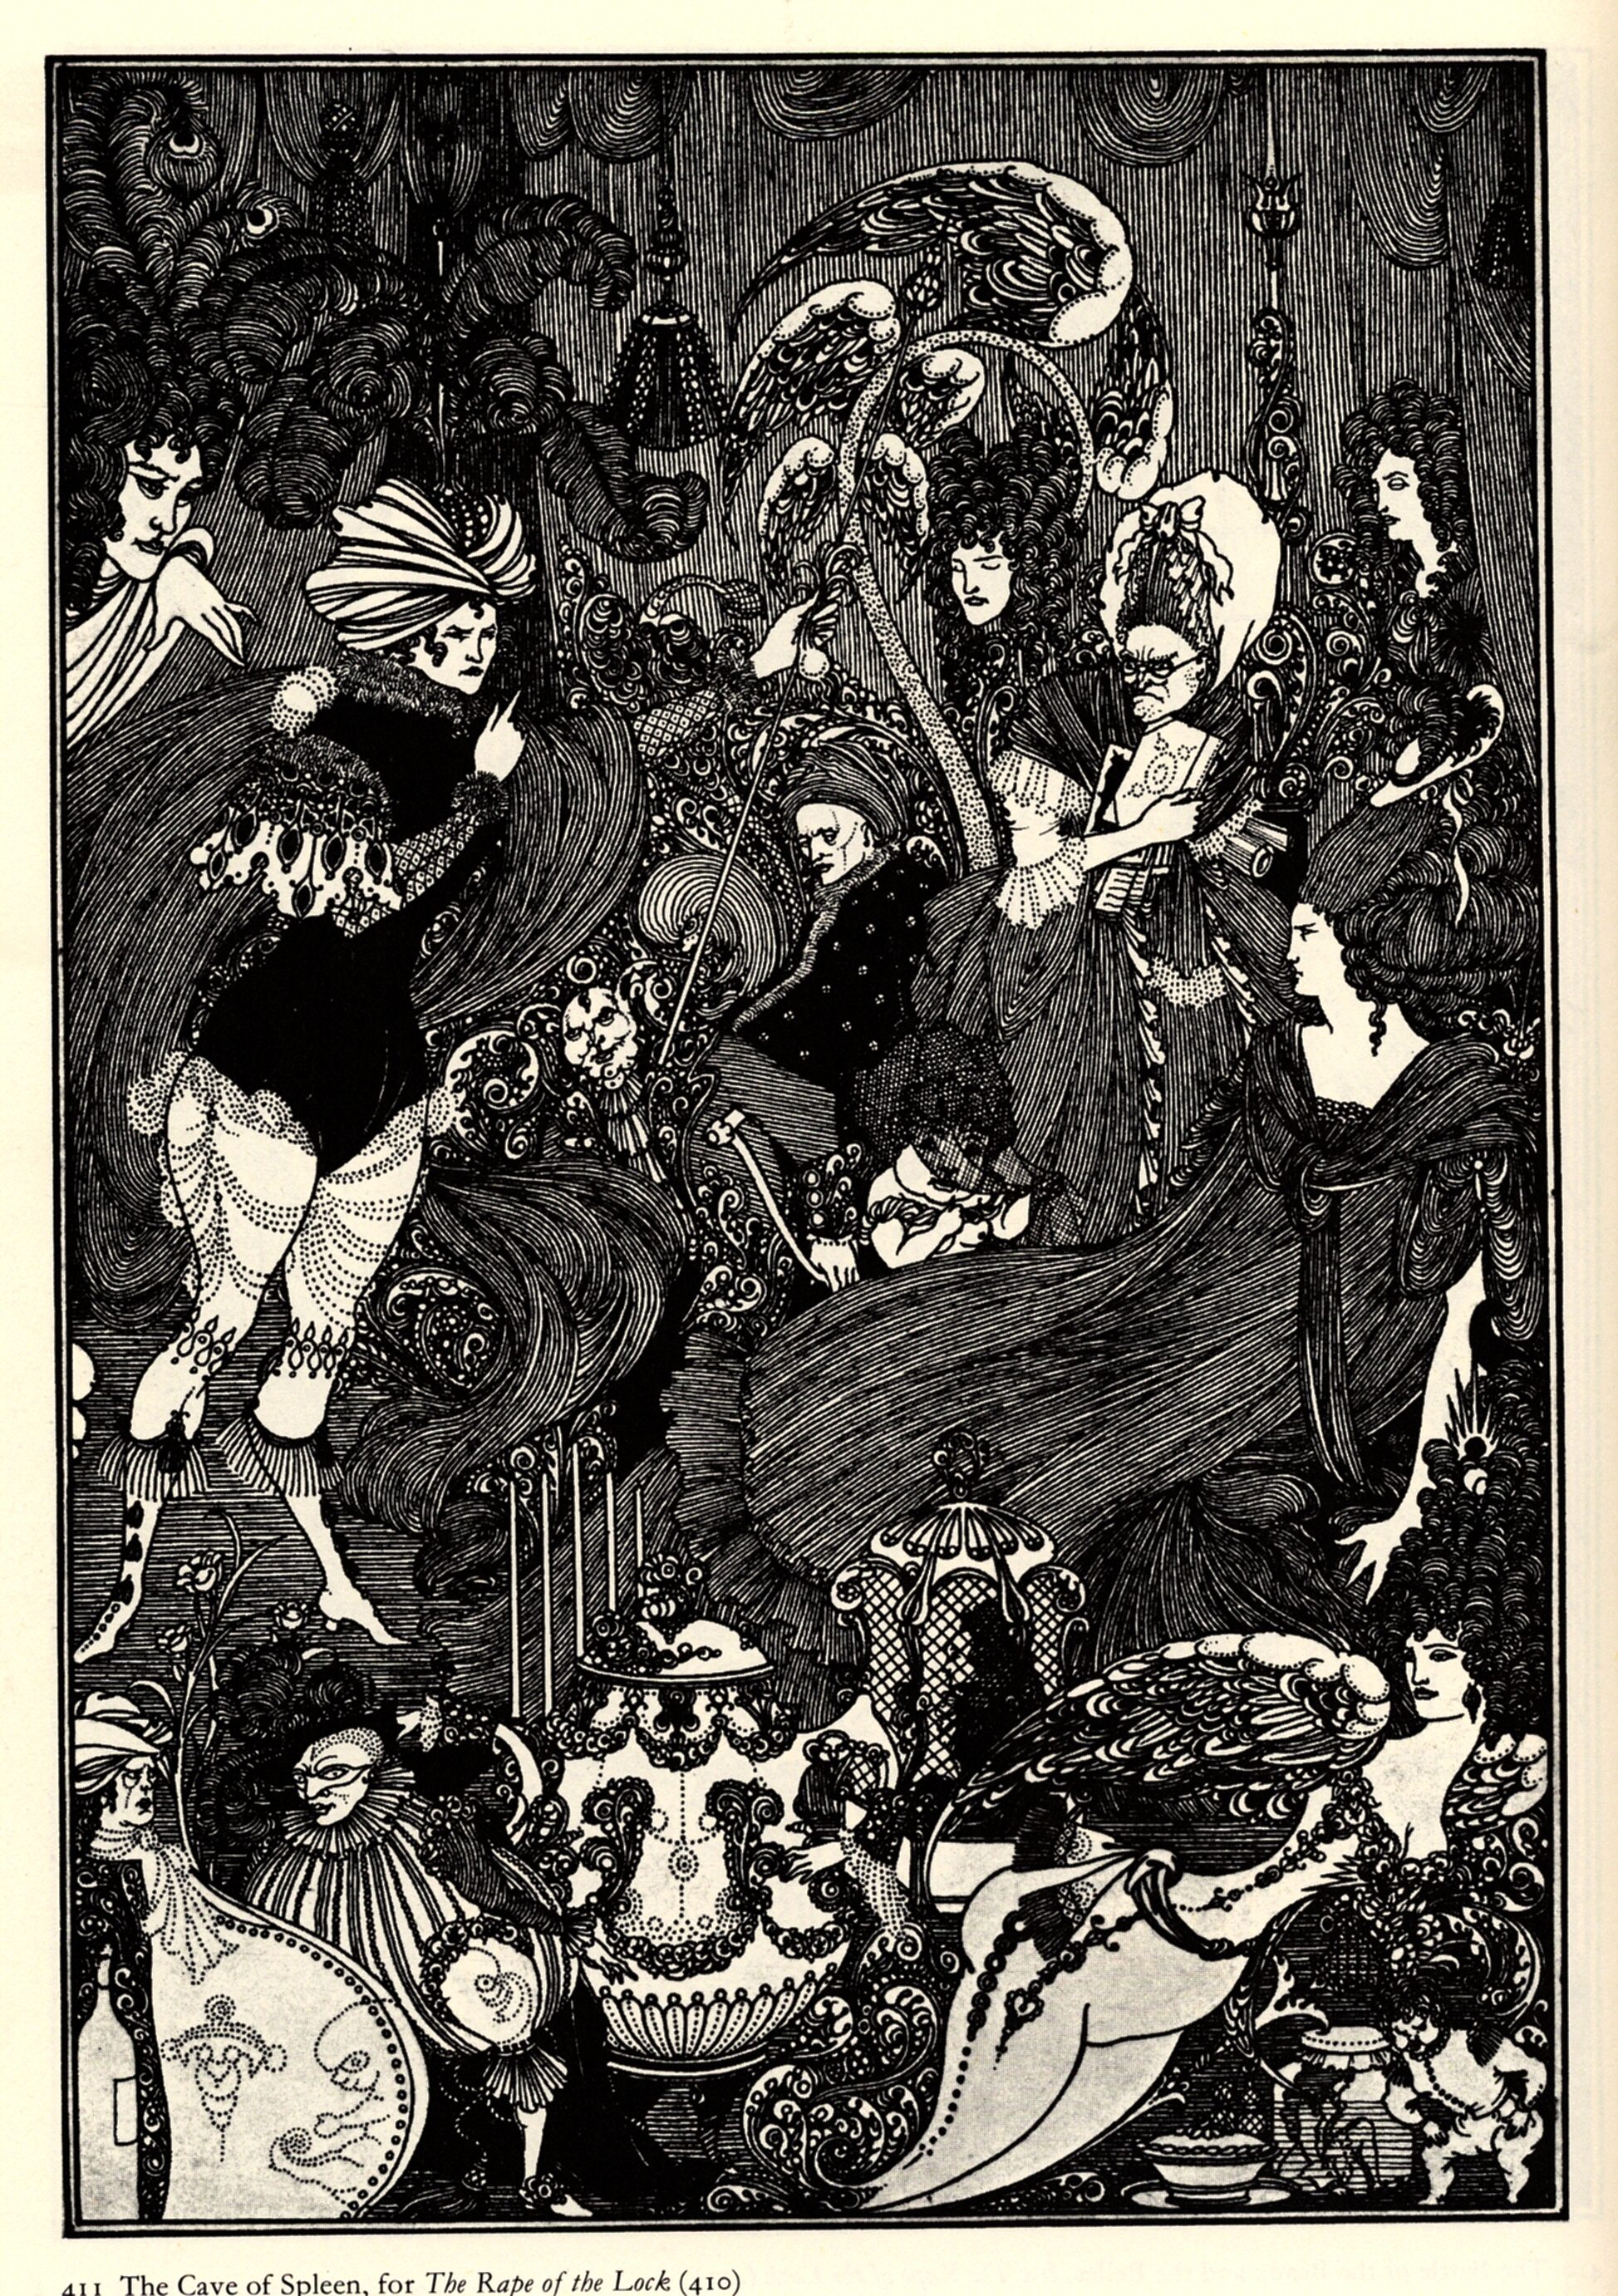 La Caverne du Spleen - Aubrey Beardsley by Aubrey Beardsley - 1896 - 25.5 x 17.3 cm 